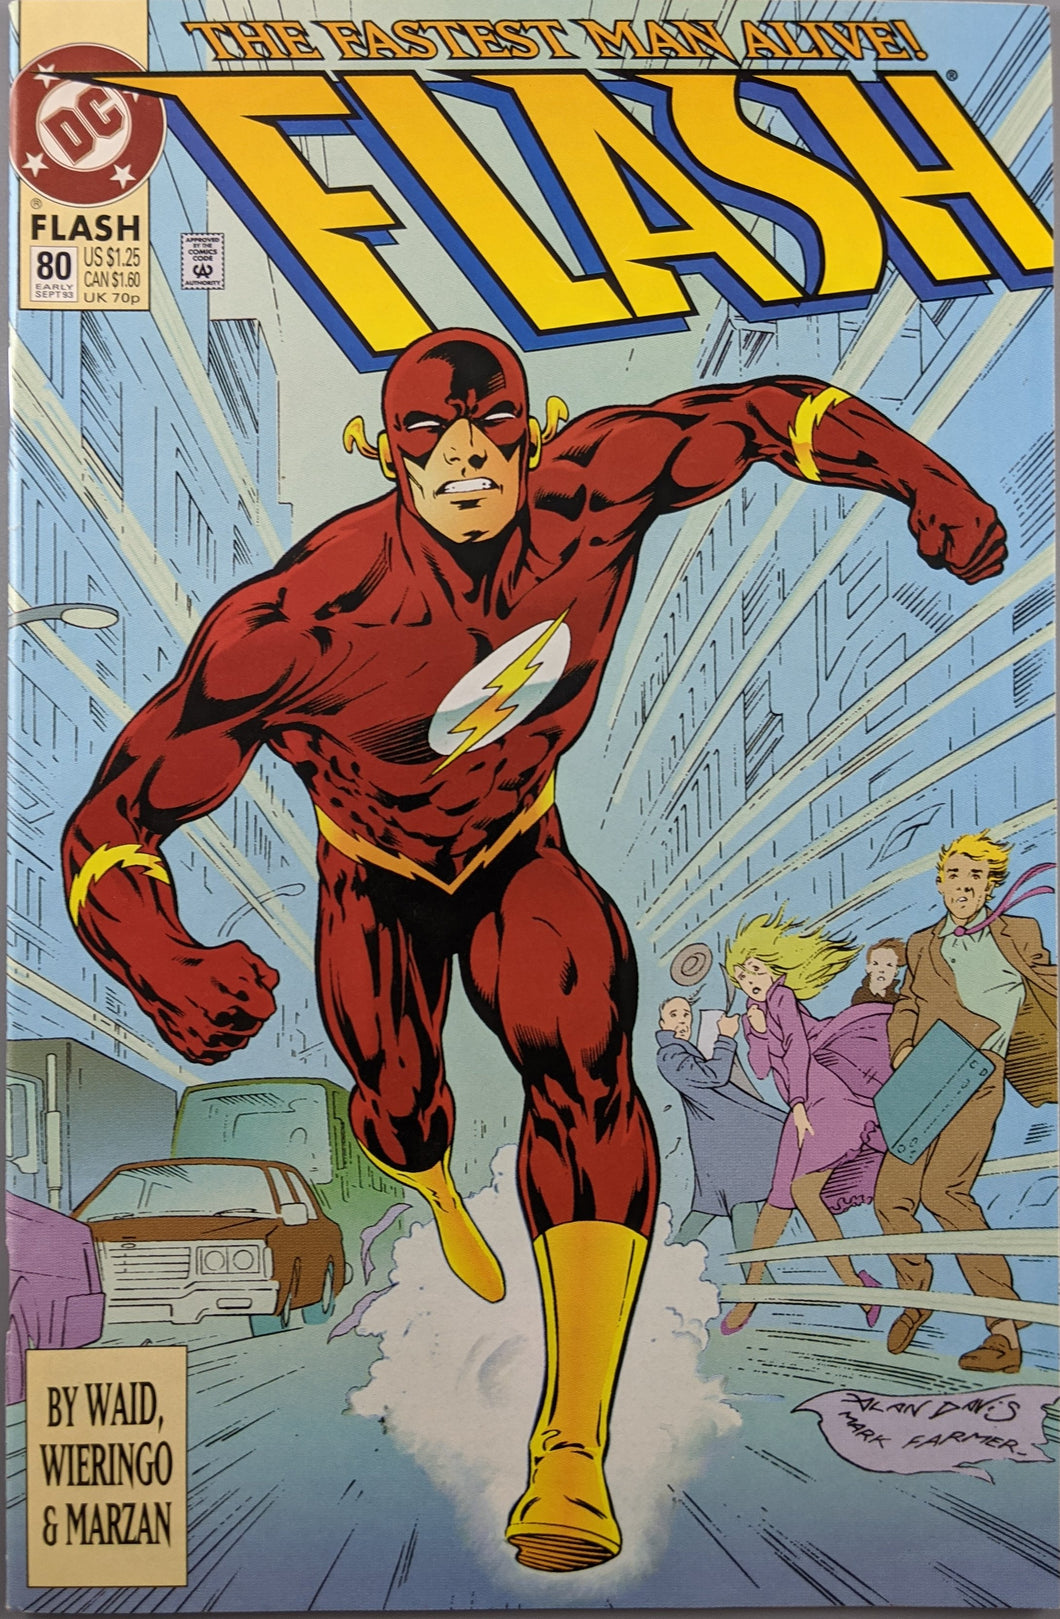 Flash #80 Comic Book Cover Art by Alan Davis